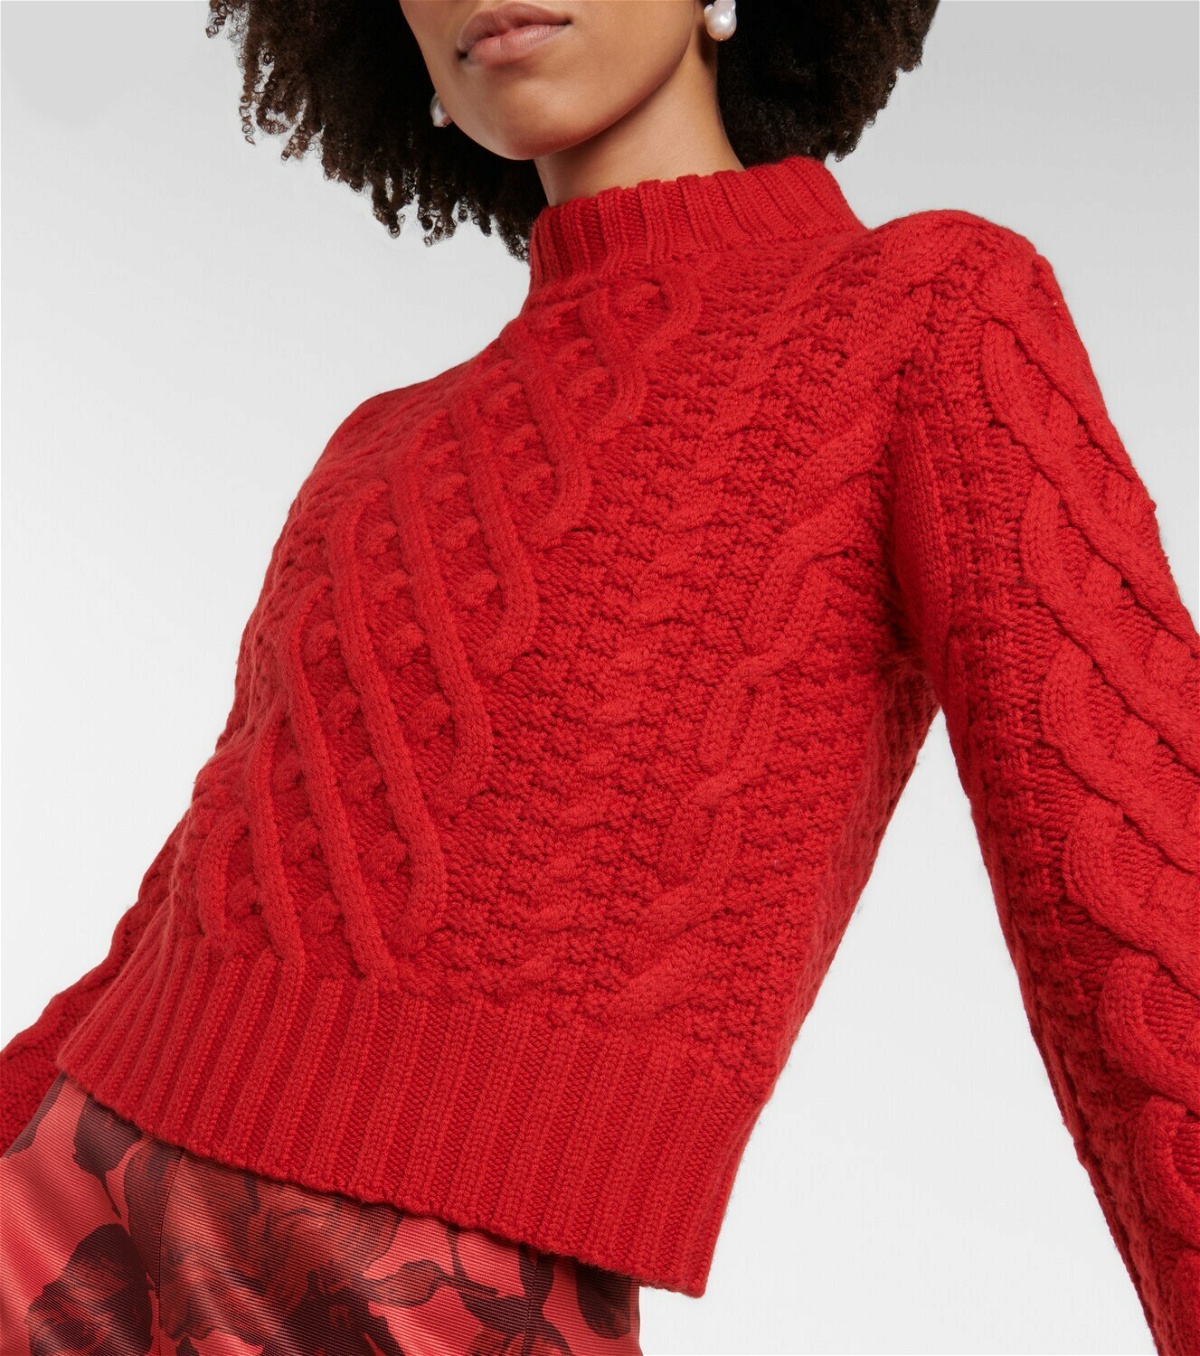 Emilia Wickstead Artie cable-knit wool-blend sweater Emilia Wickstead